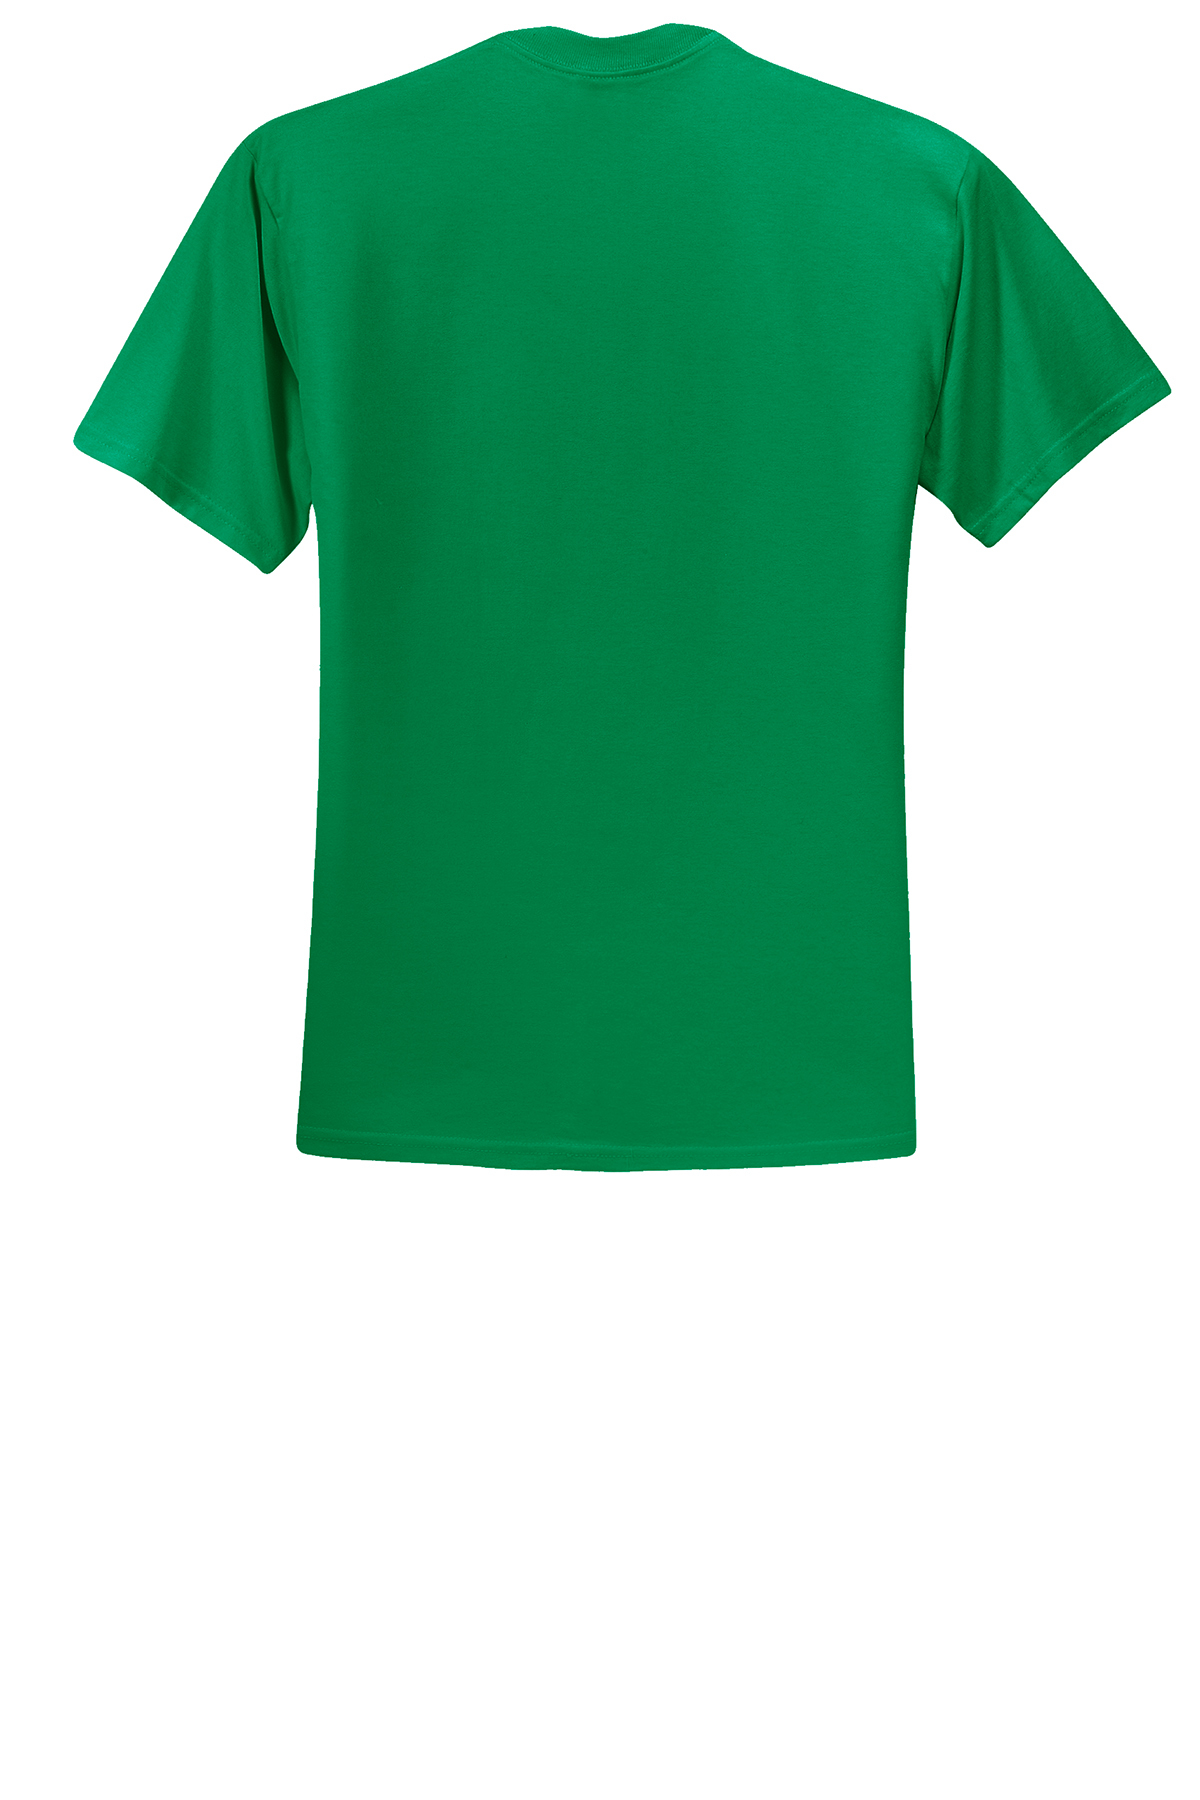 Always Keep It Playa T-Shirt (Black/Lime Green/Yellow/Gray